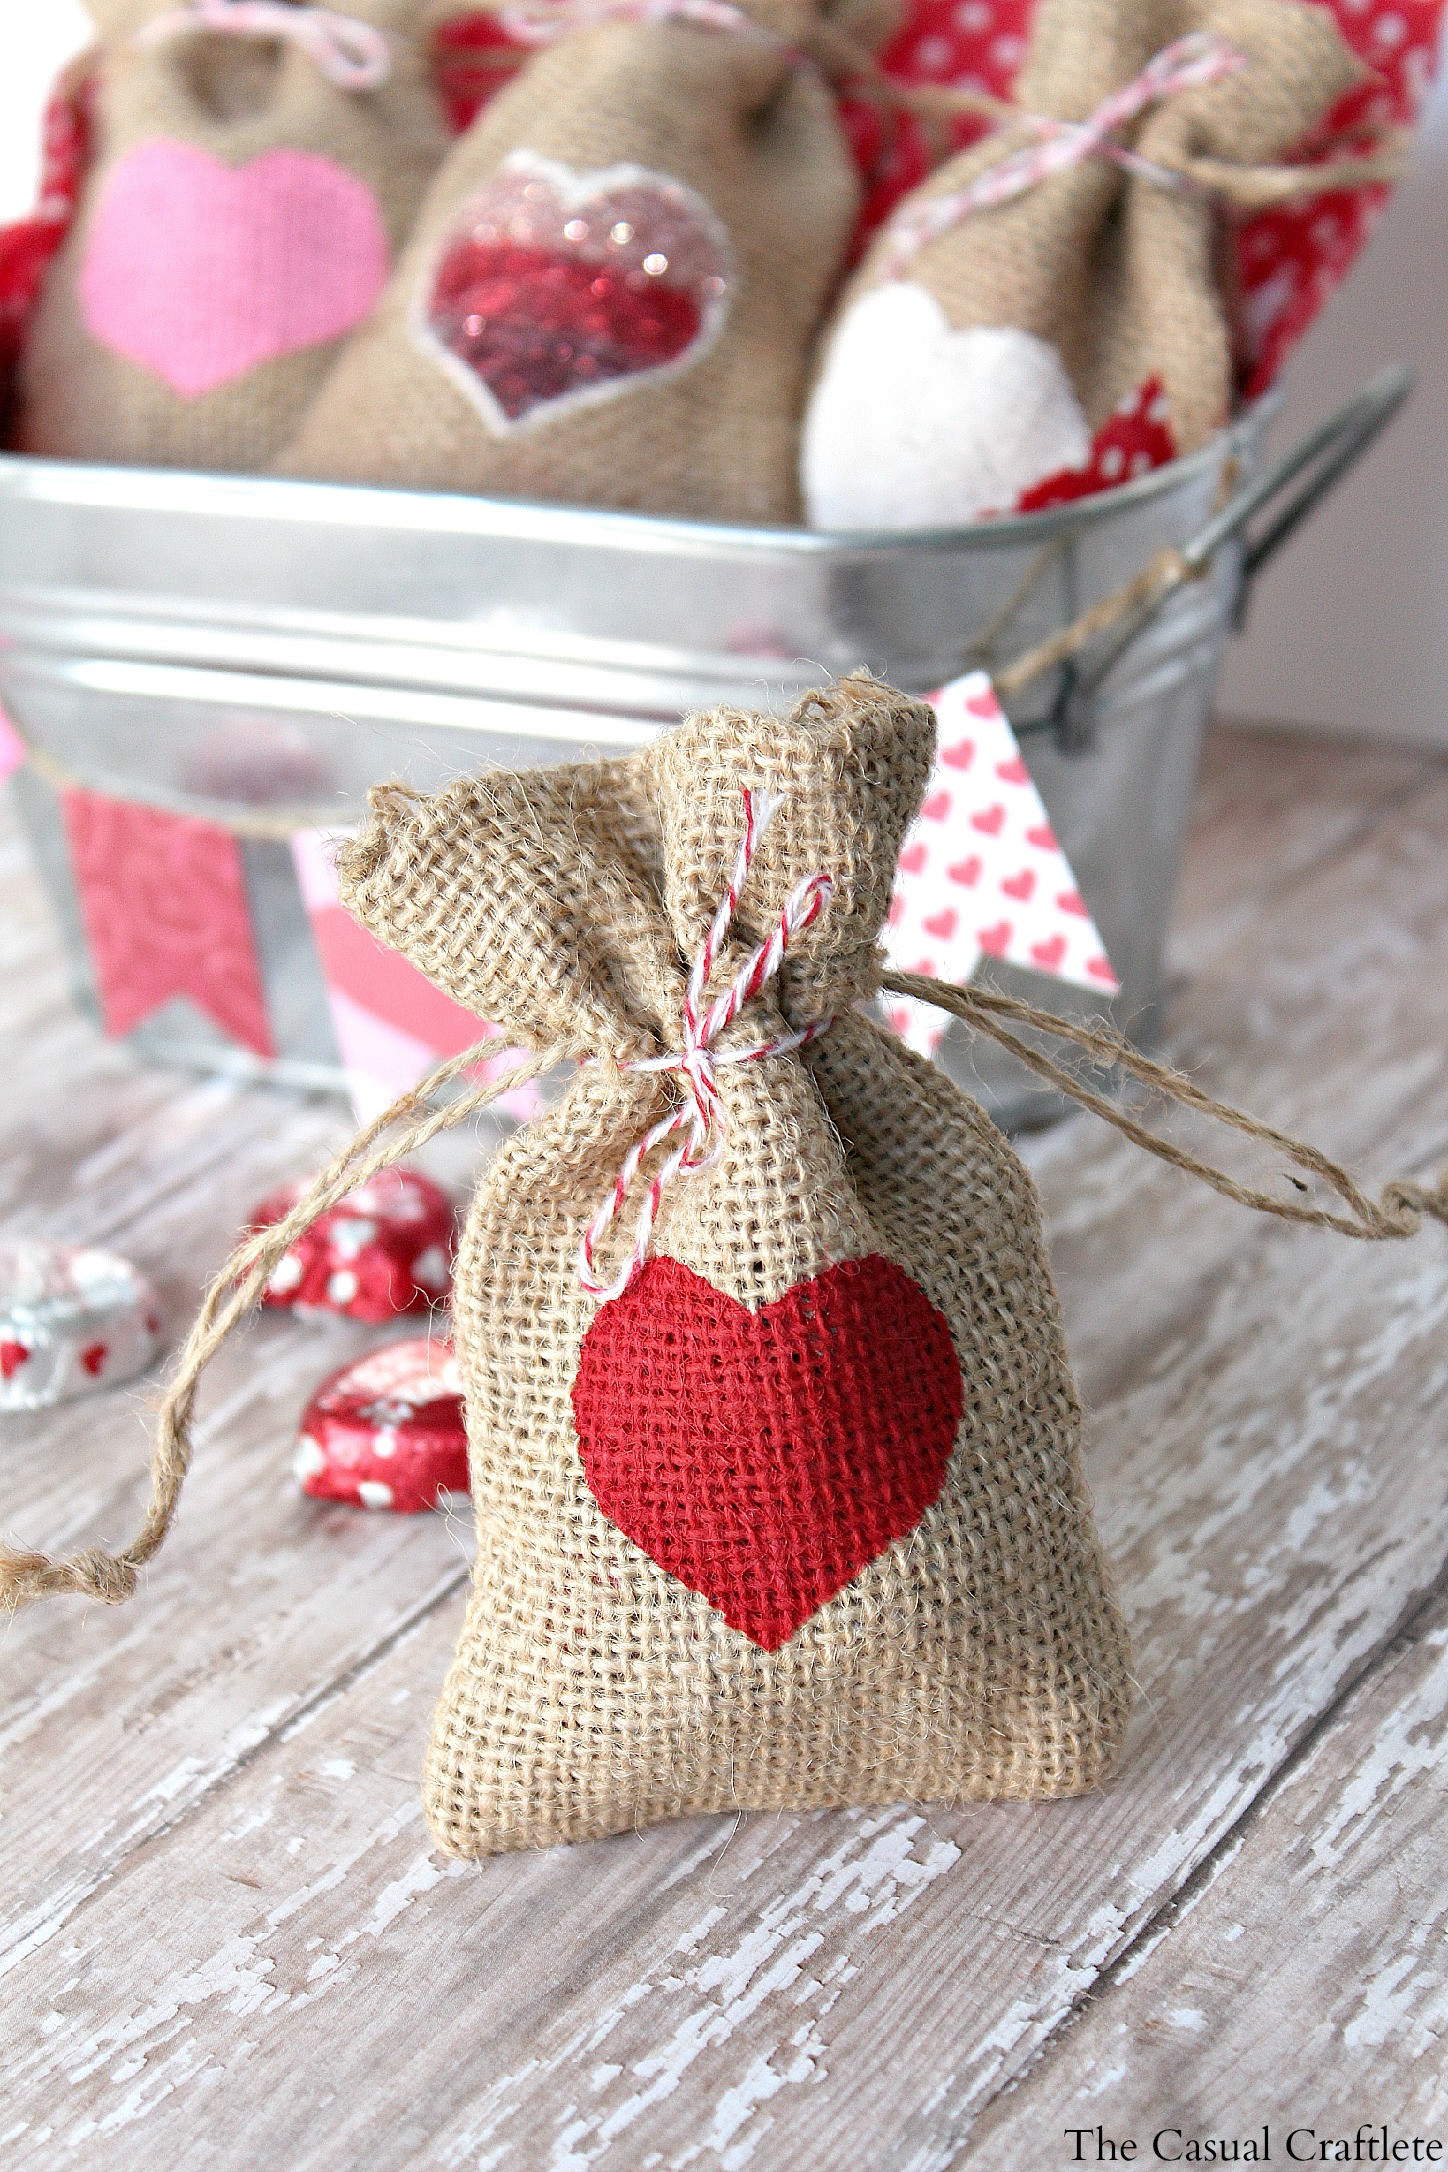 DIY Valentines Gift
 DIY Valentine s Day Burlap Gift Bags